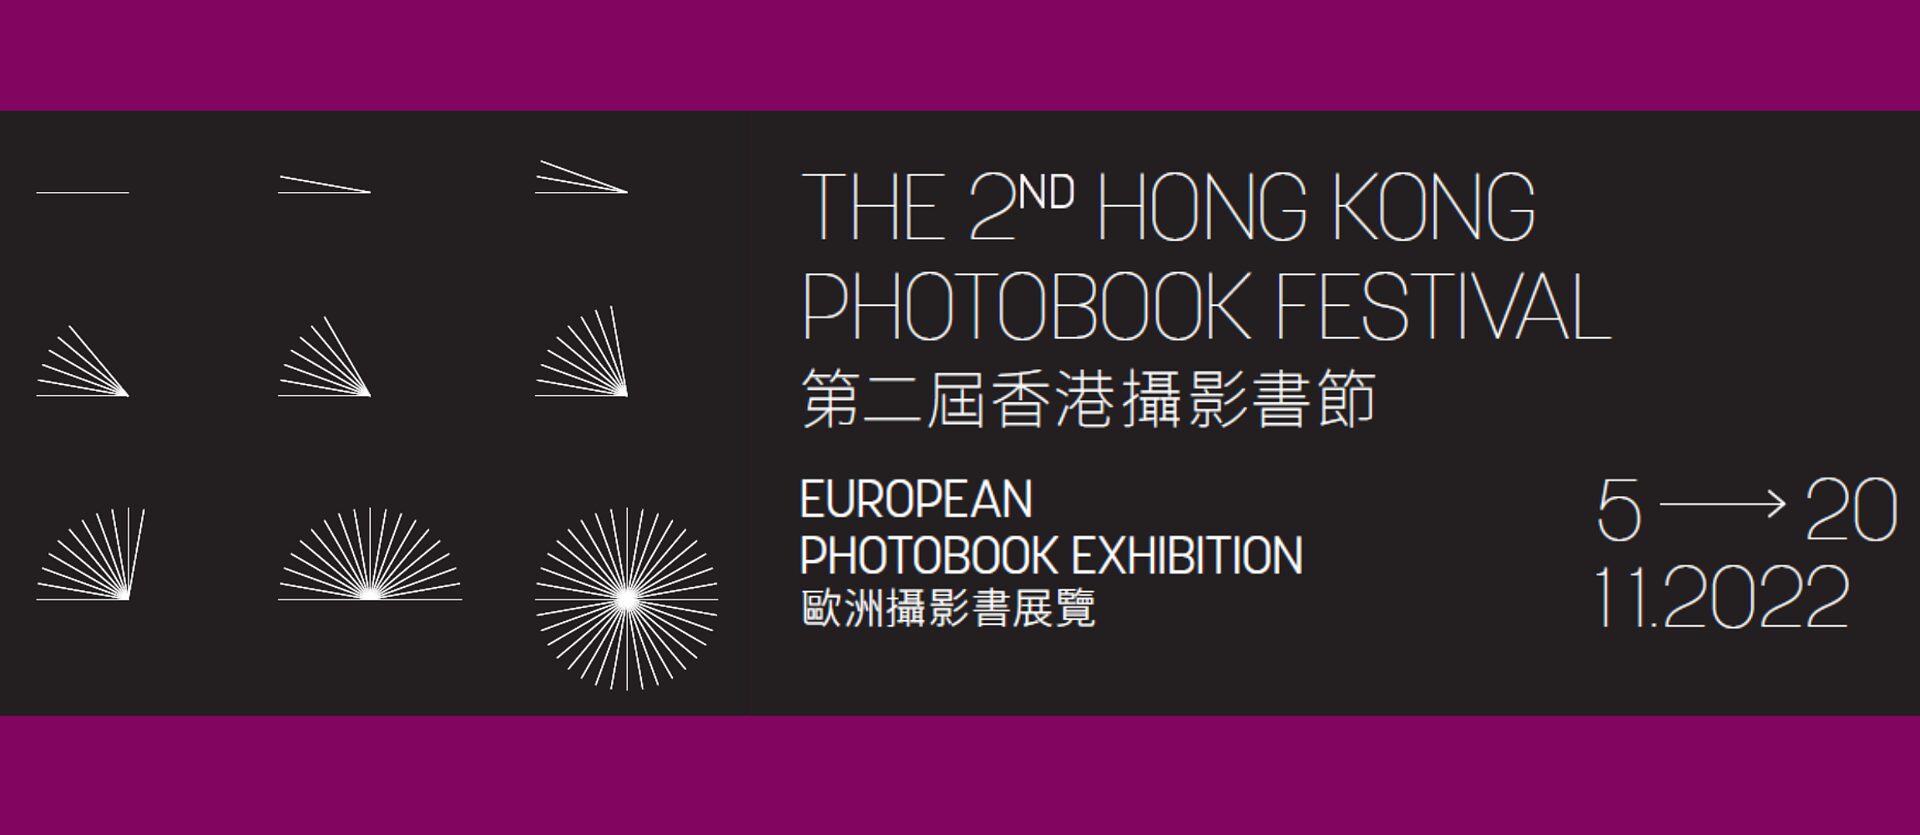 Events - Goethe-Institut Hong Kong